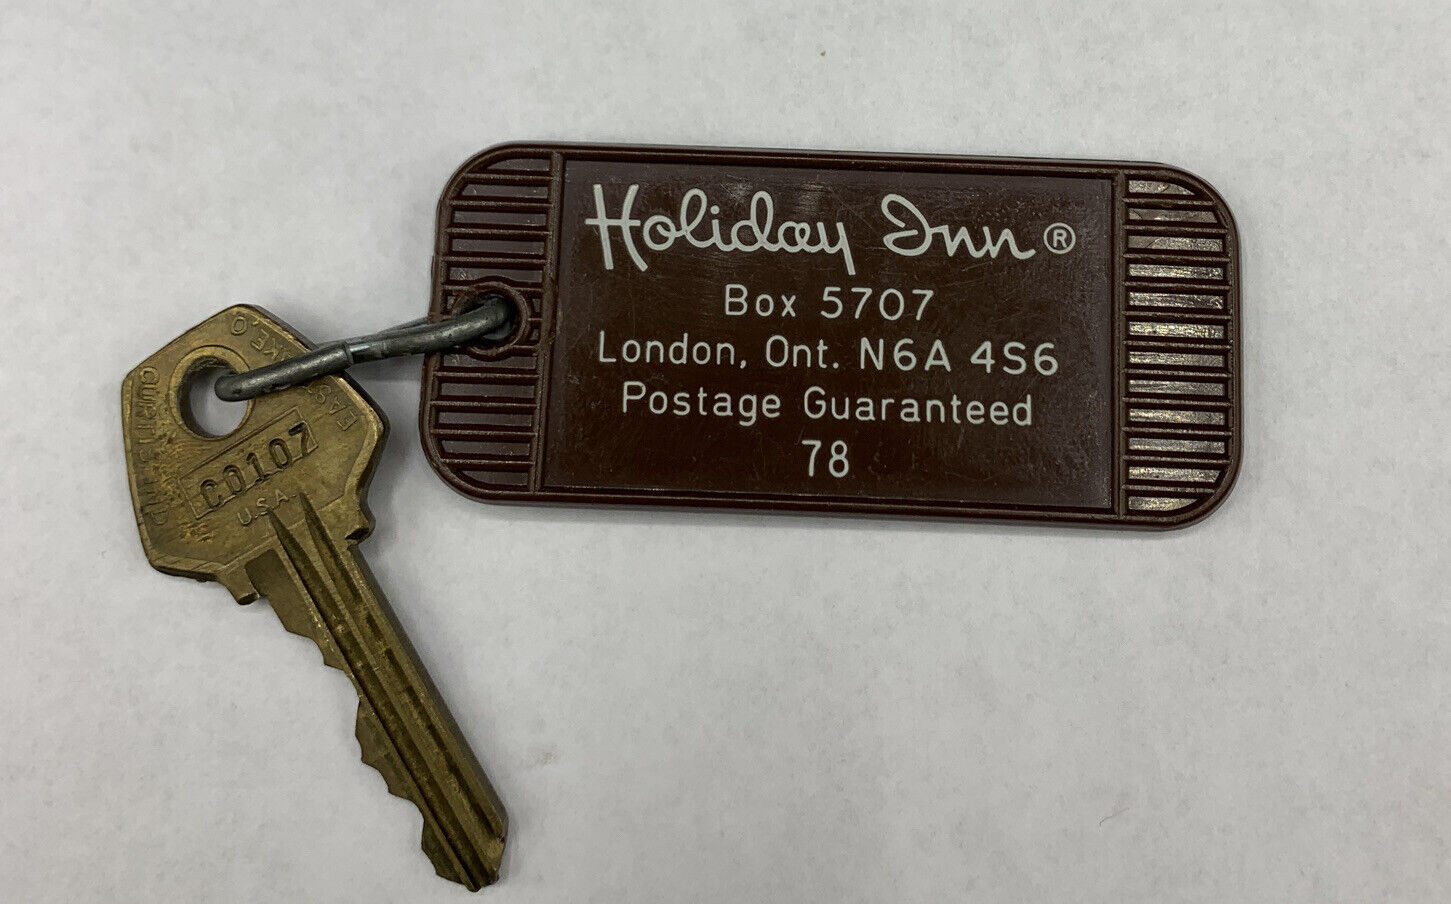 Holiday Inn Hotel Motel Room Key Fob with Key London Ontario Canada #730